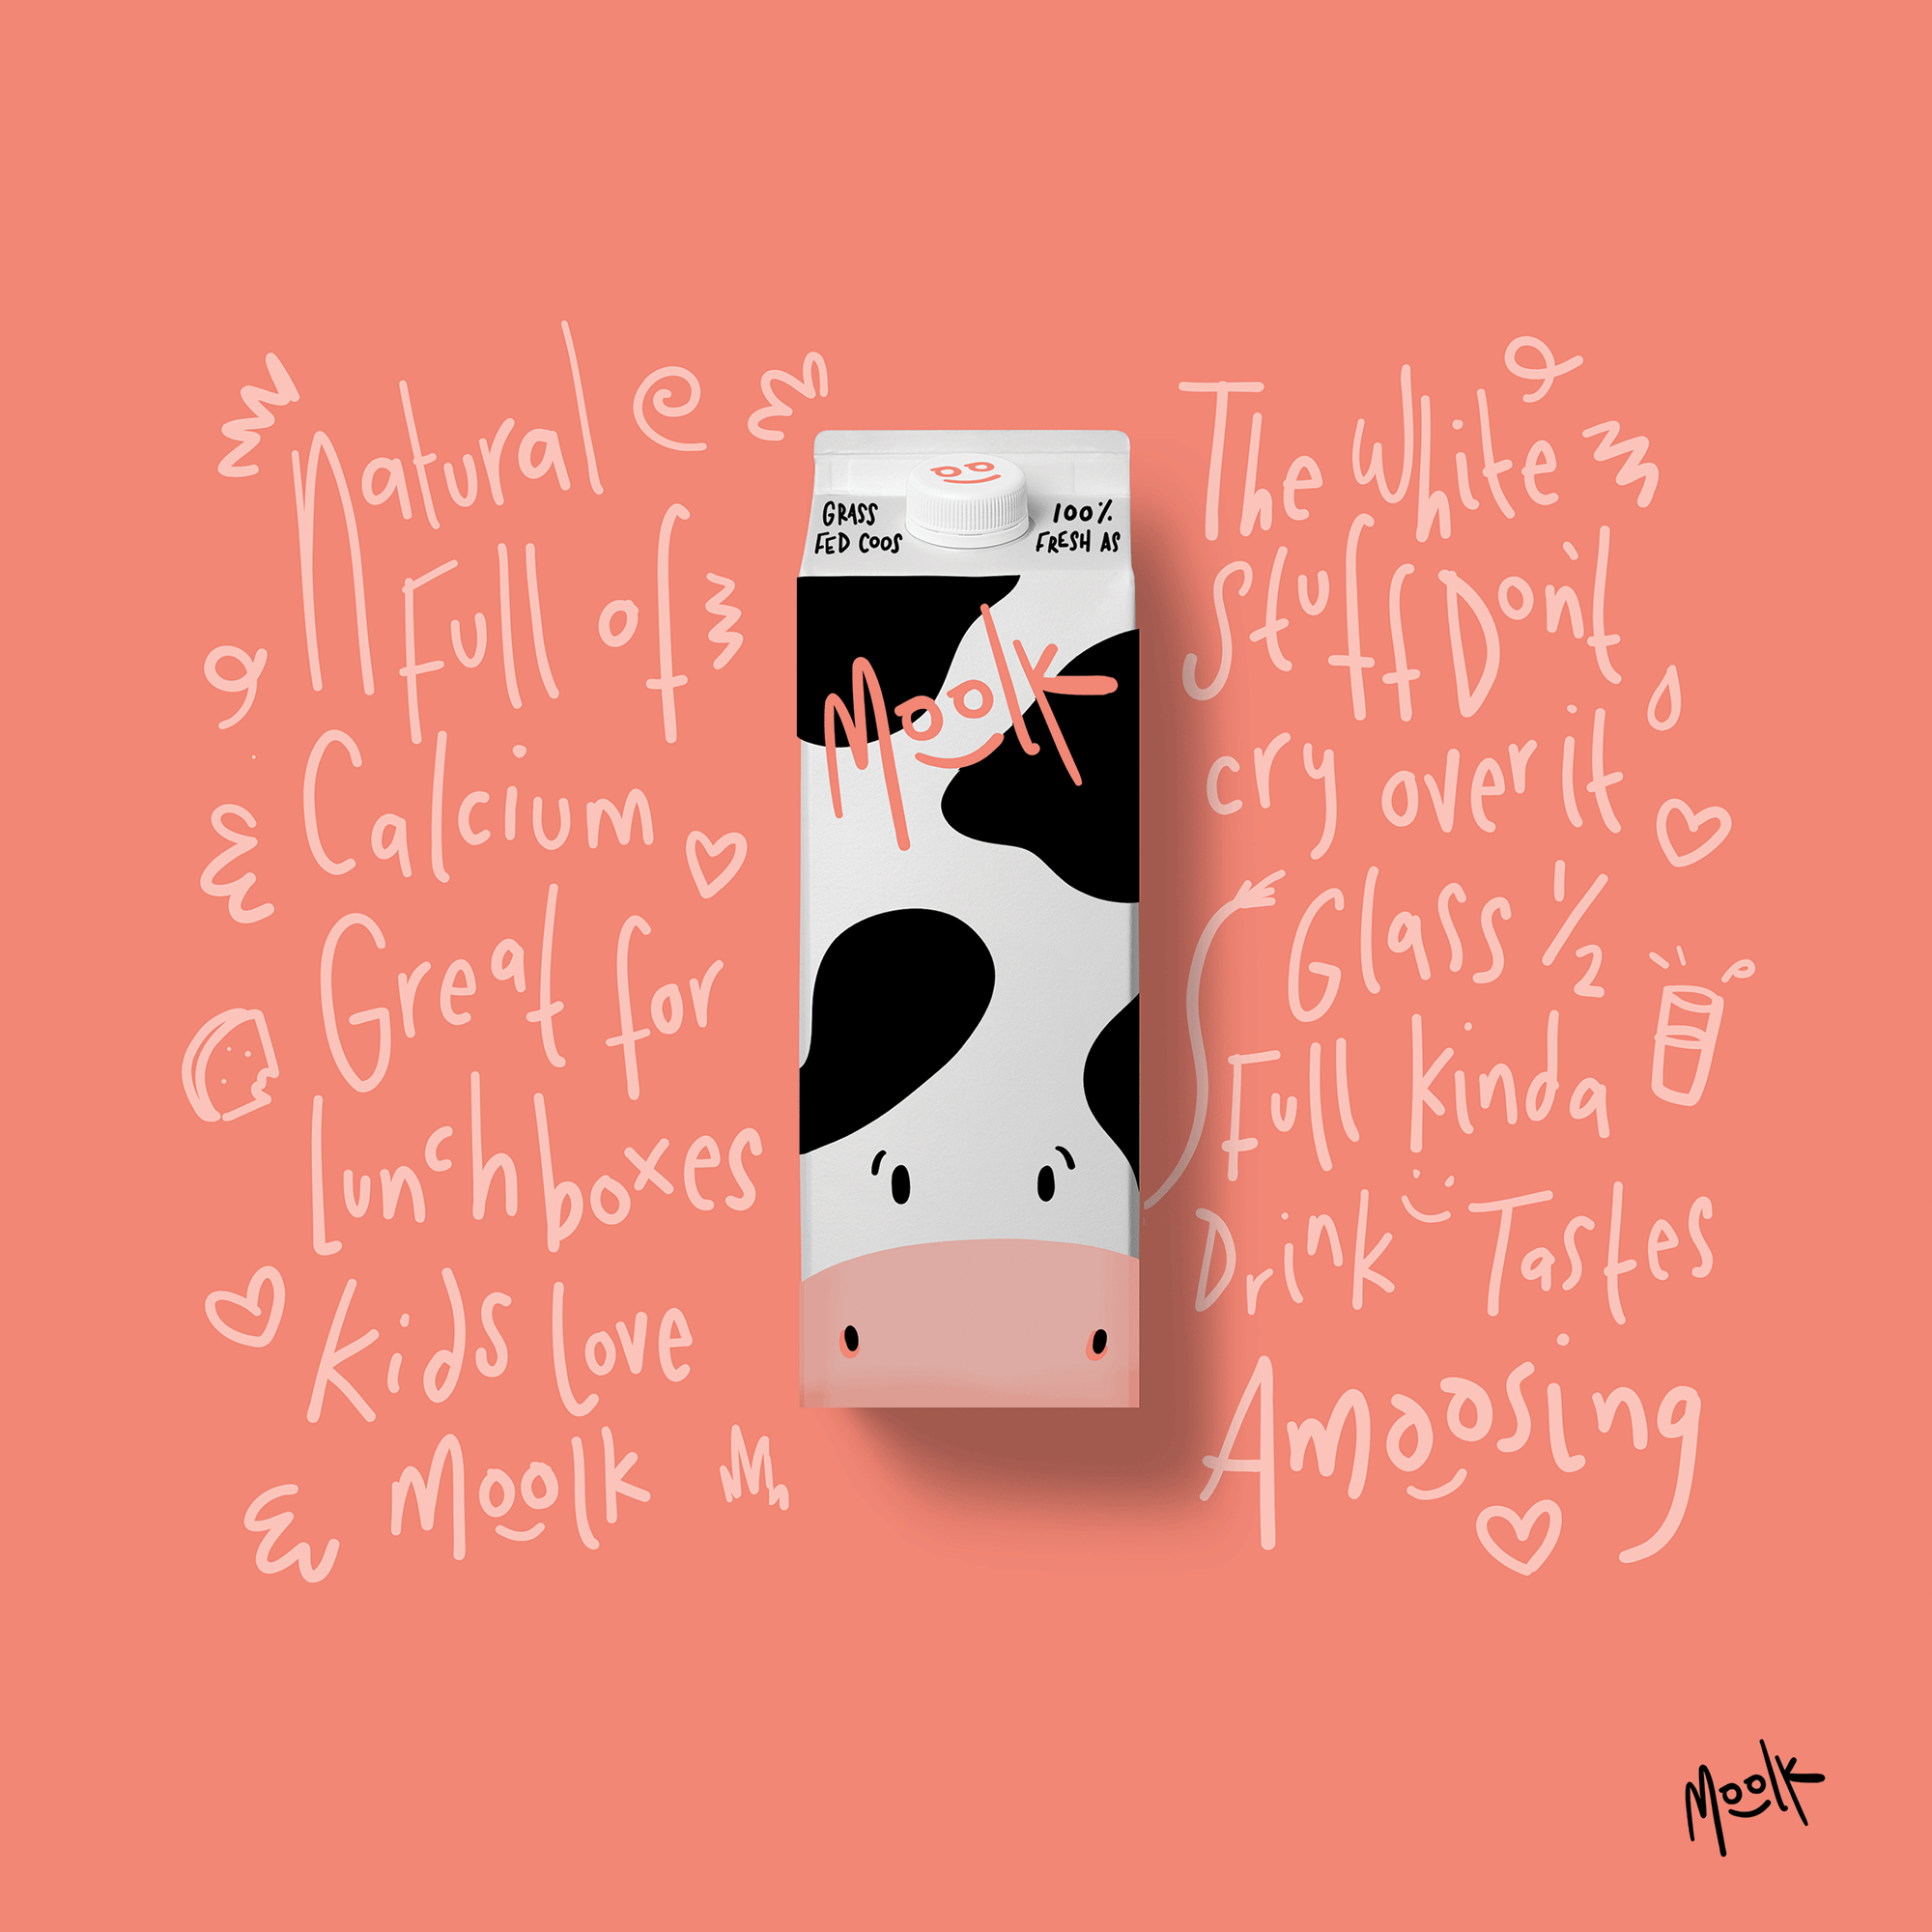 tiny_grey_moolk_milk_product_advertising_illustration_2000